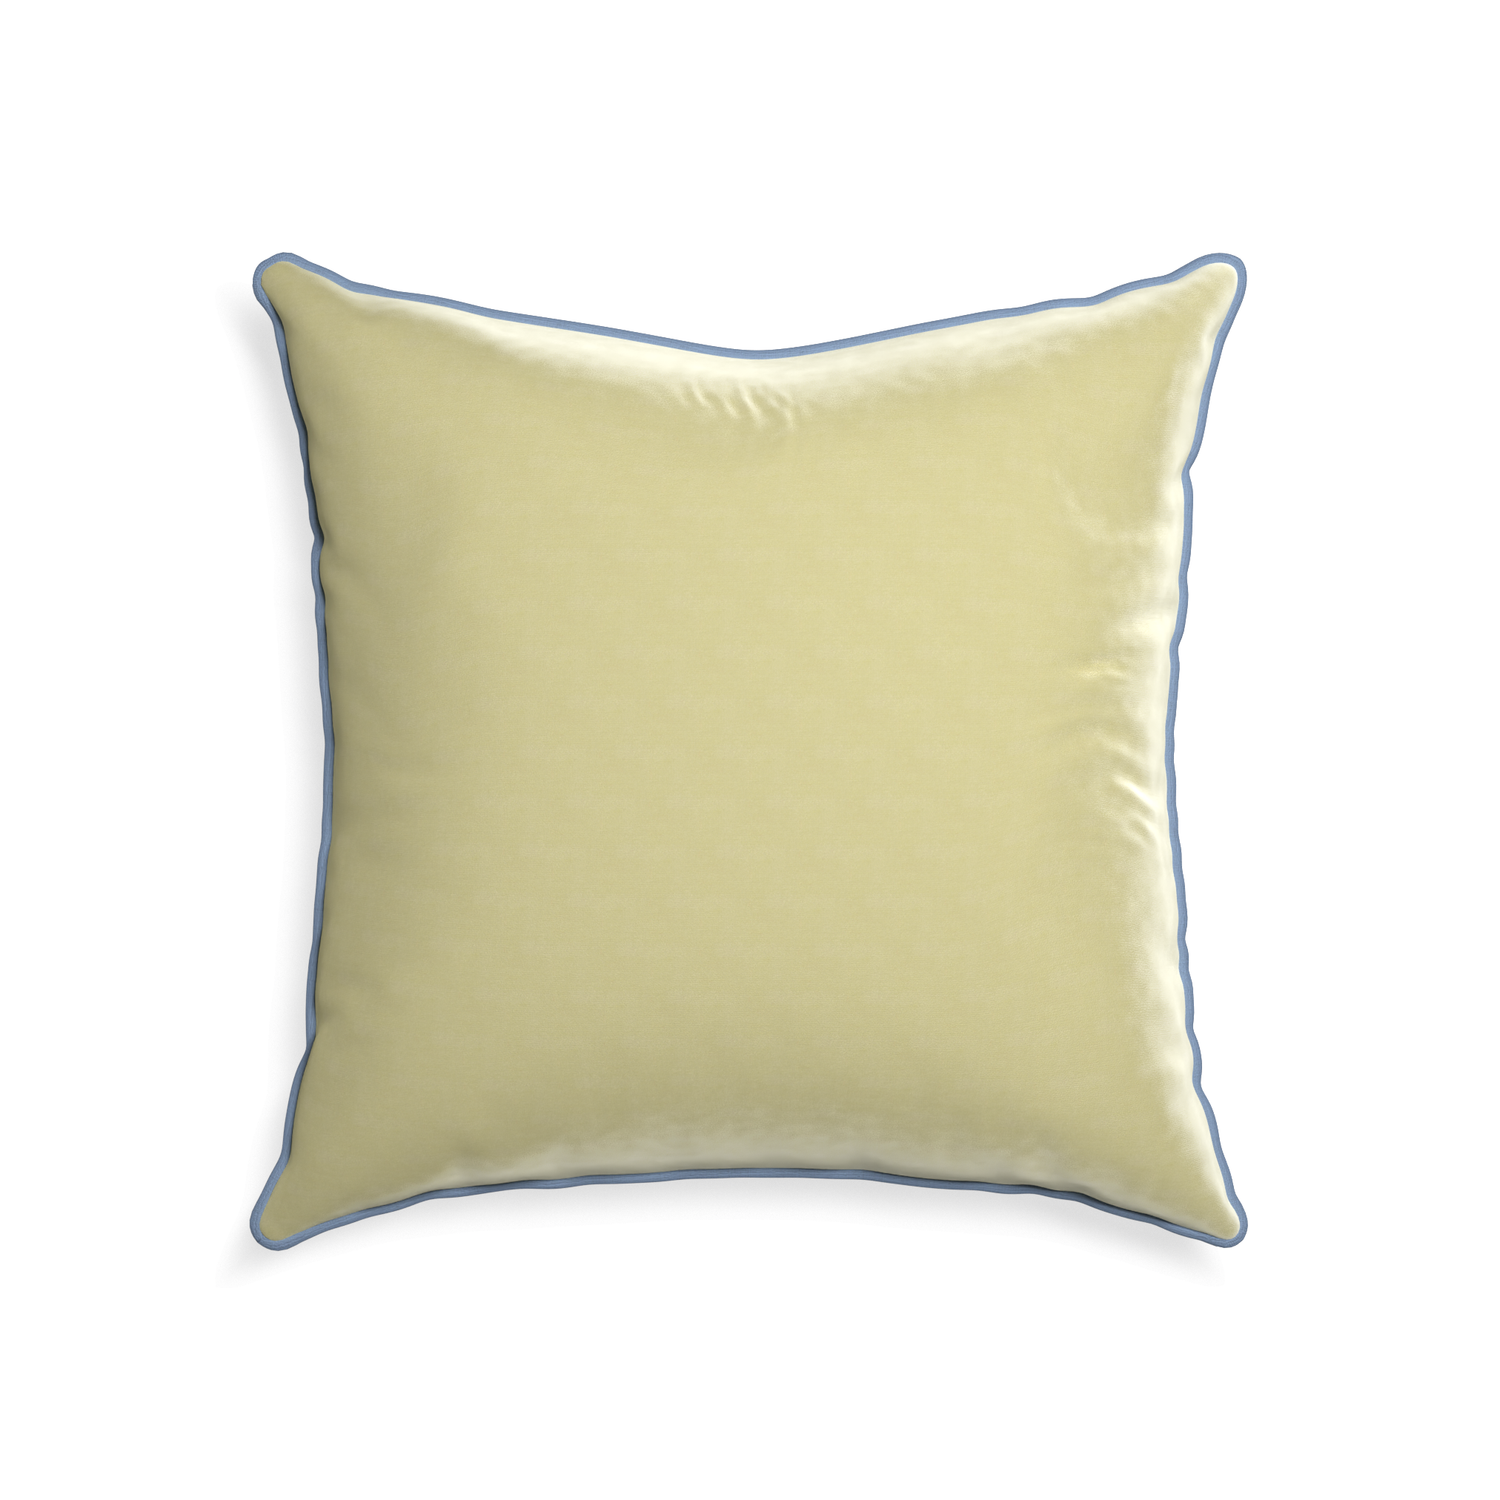 square light green velvet pillow with sky blue piping